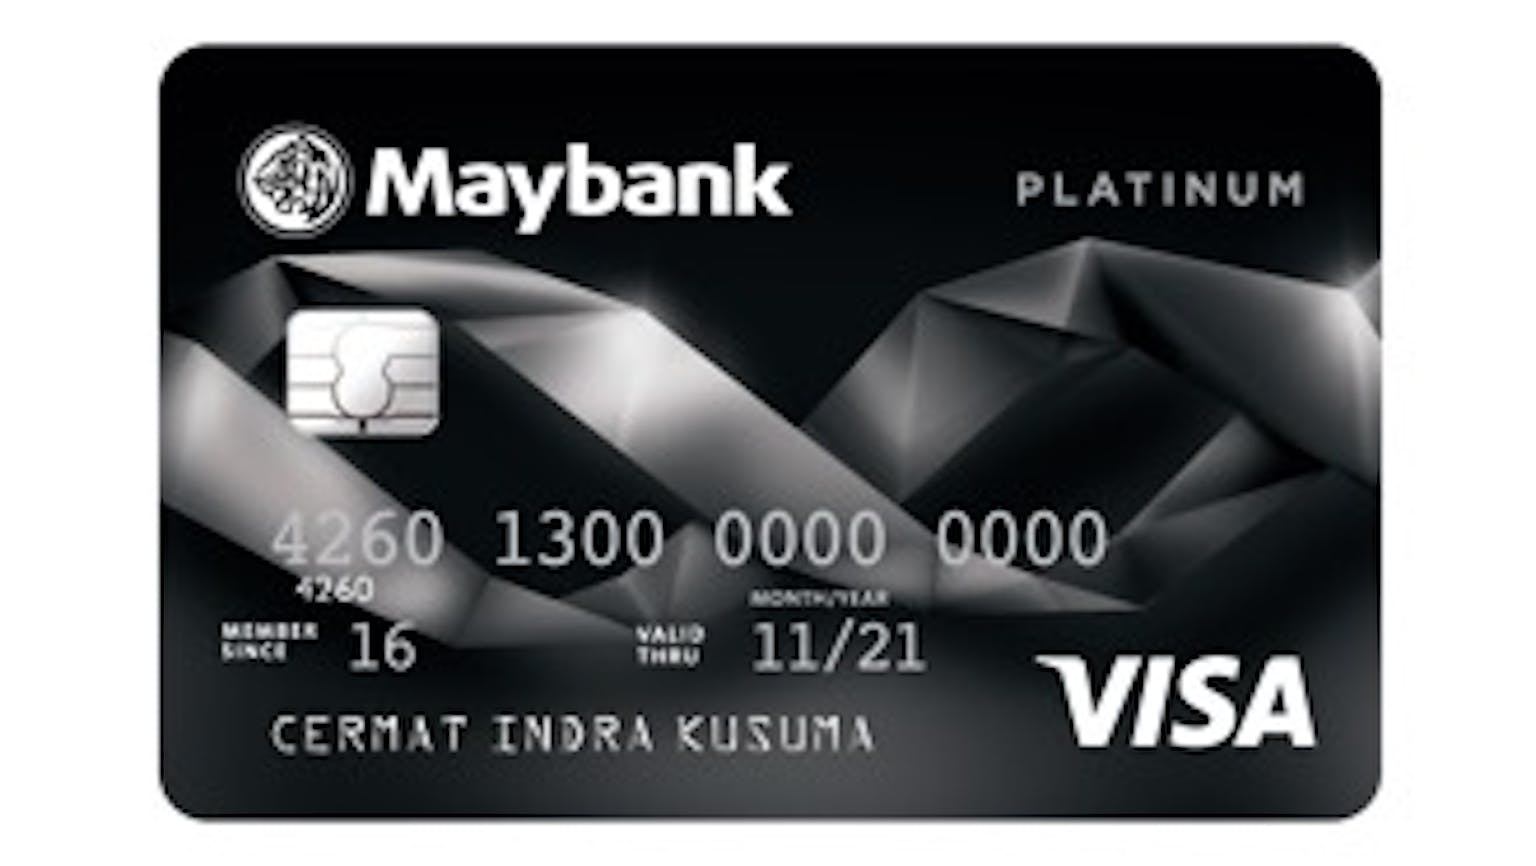 Maybank VISA Platinum